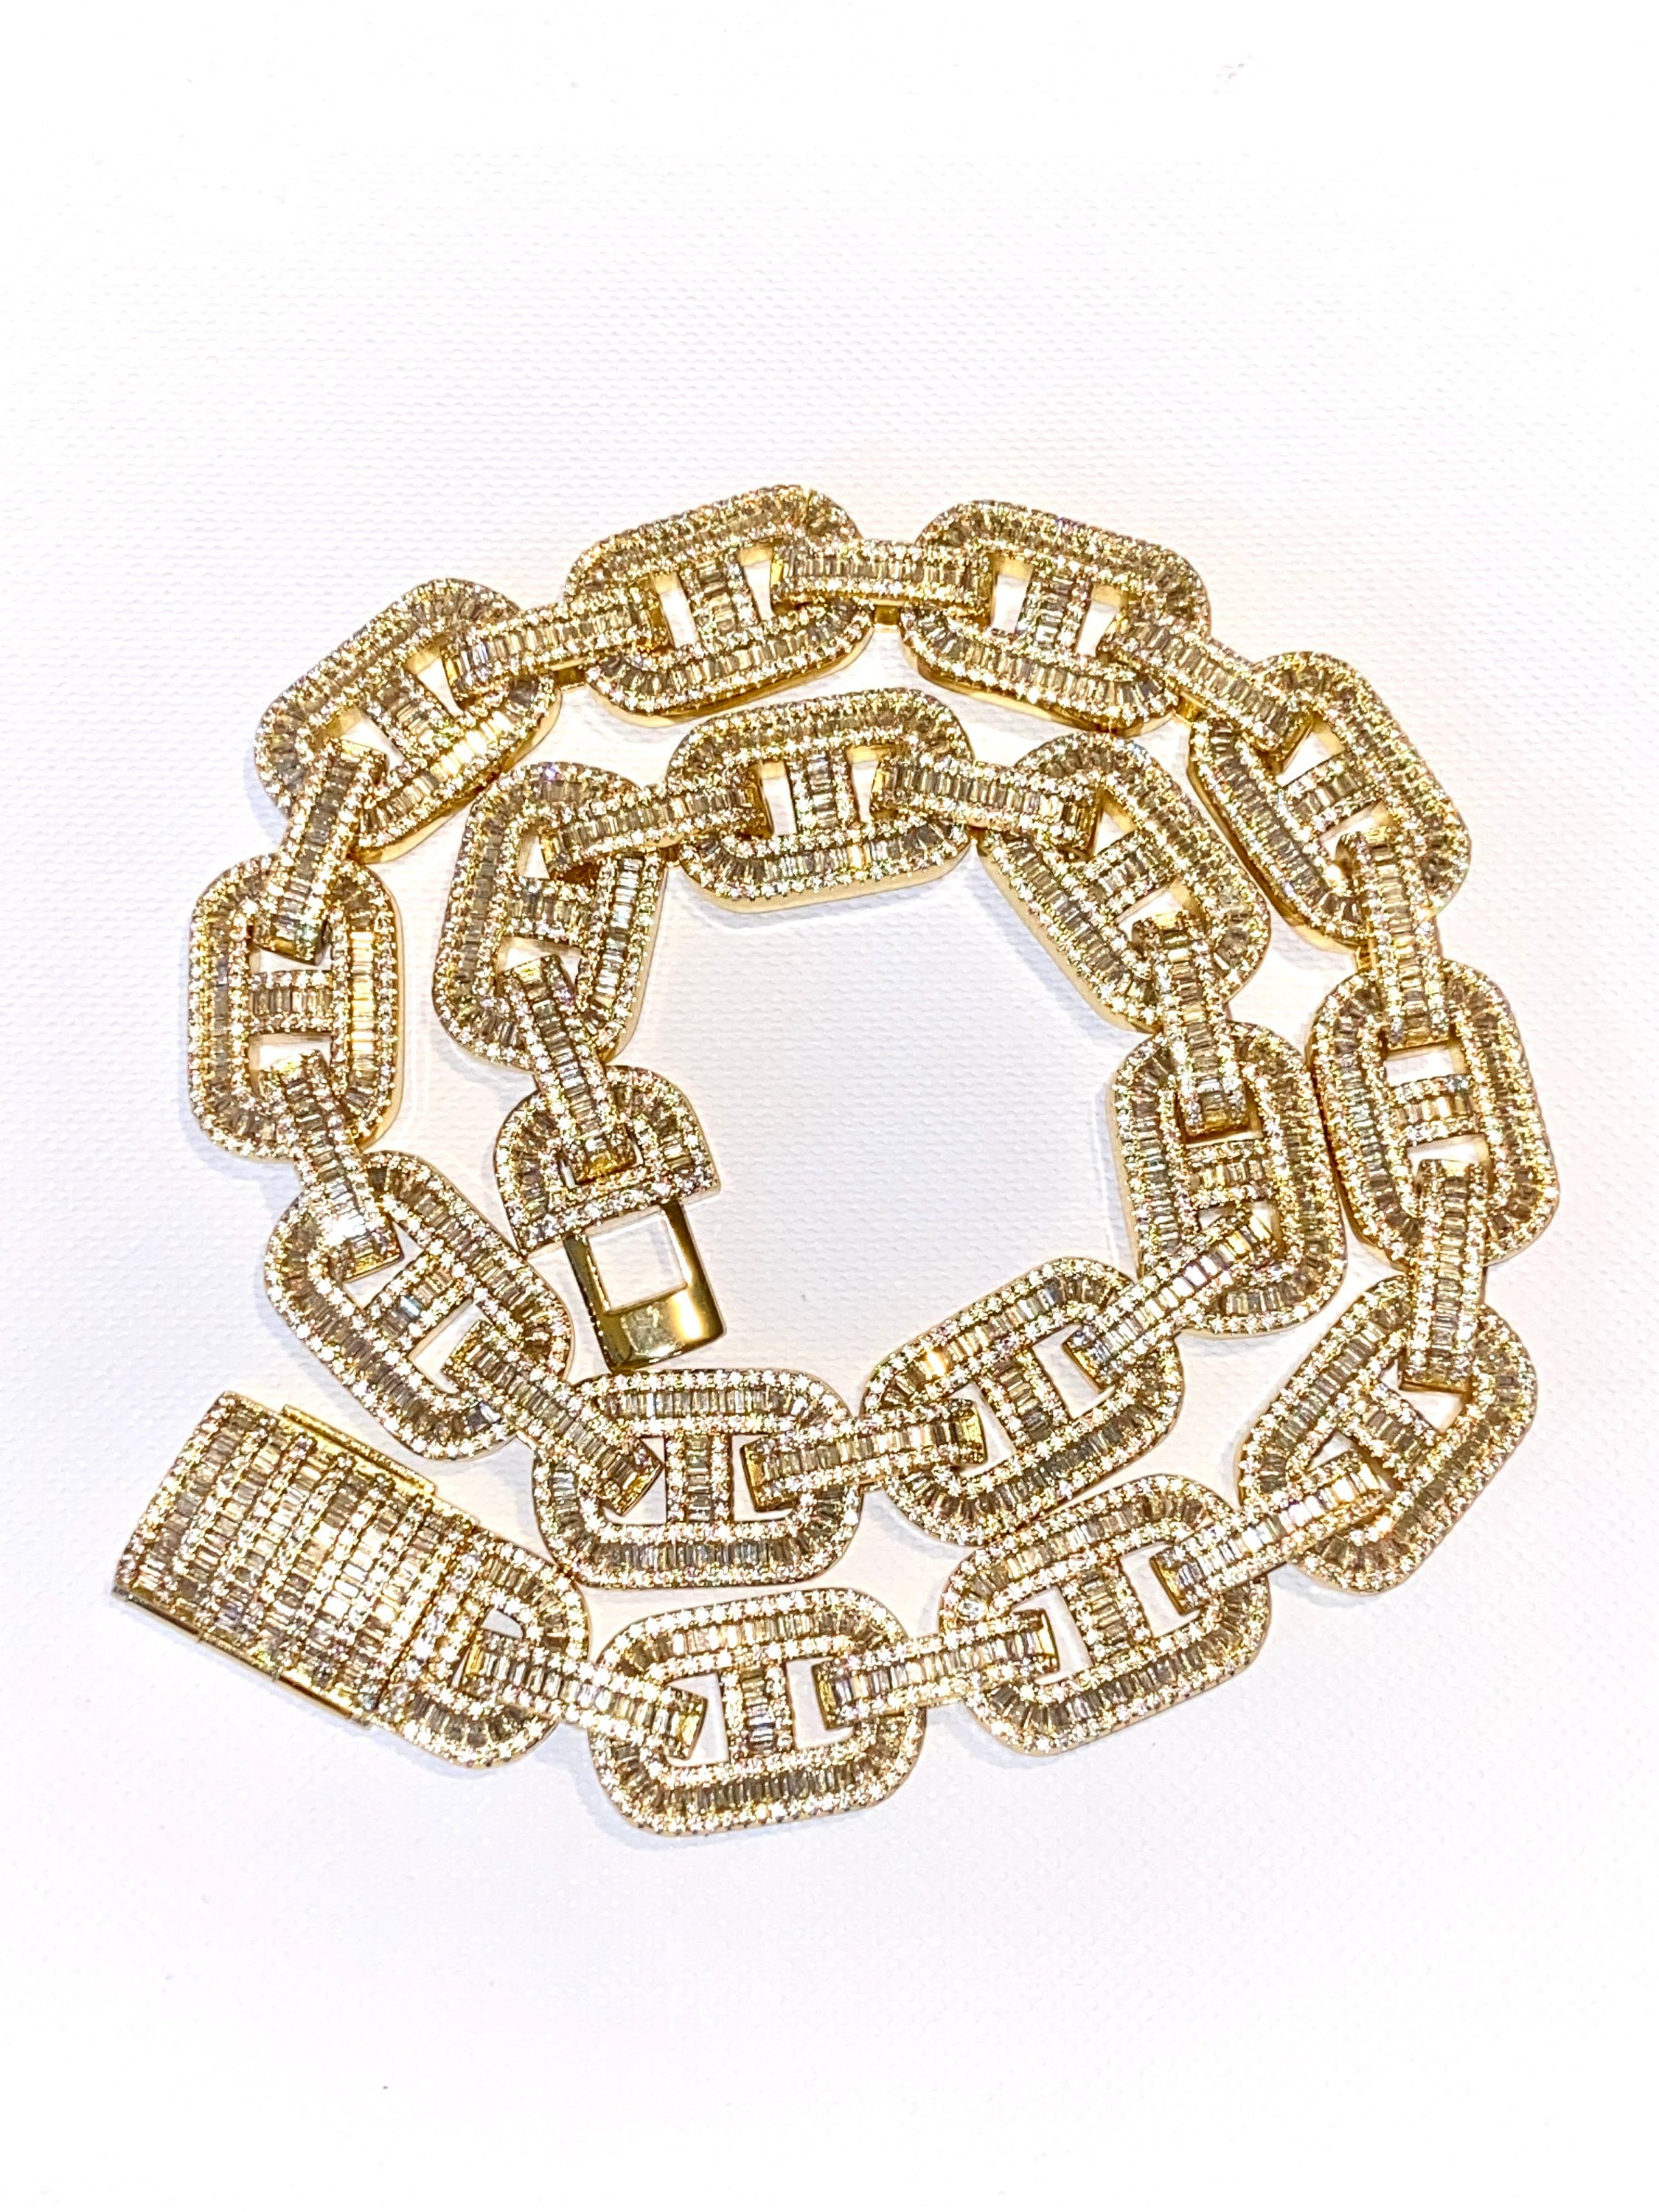 Men's Desginer Link Chain Necklace14k Gold 5X Layered | Etsy